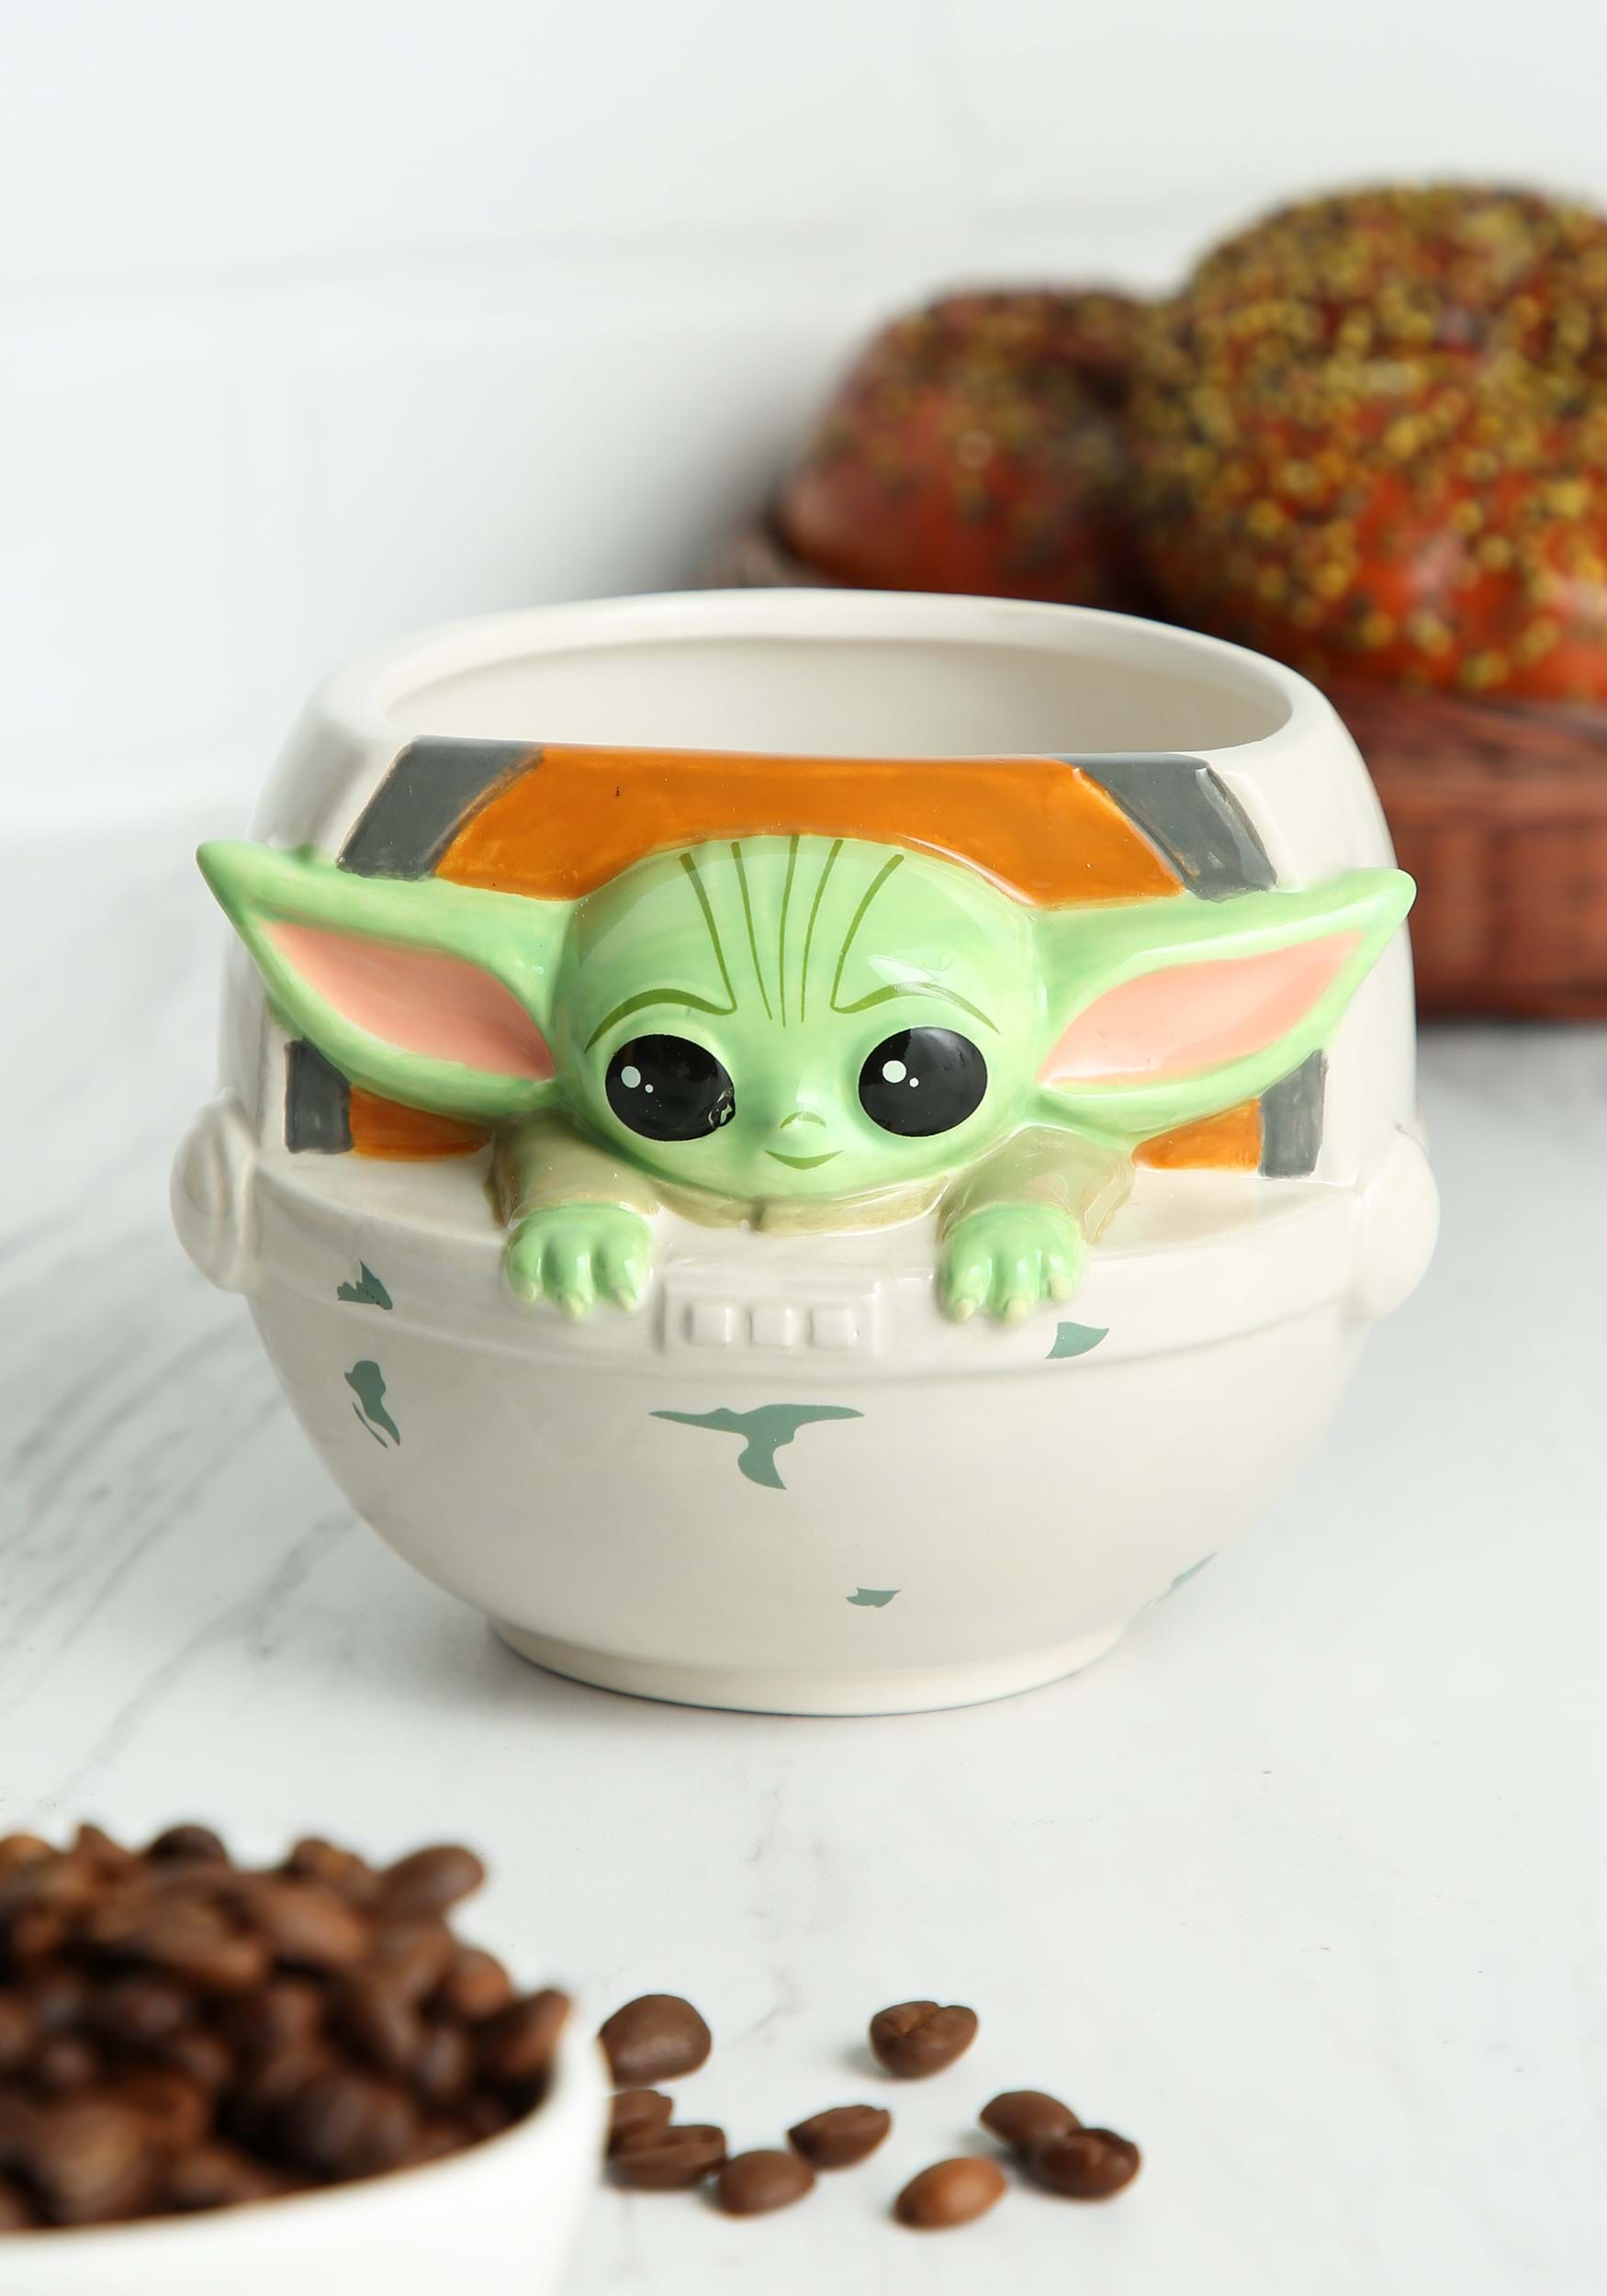 Baby Yoda The Mandalorian 3D Mug Official Merchandise